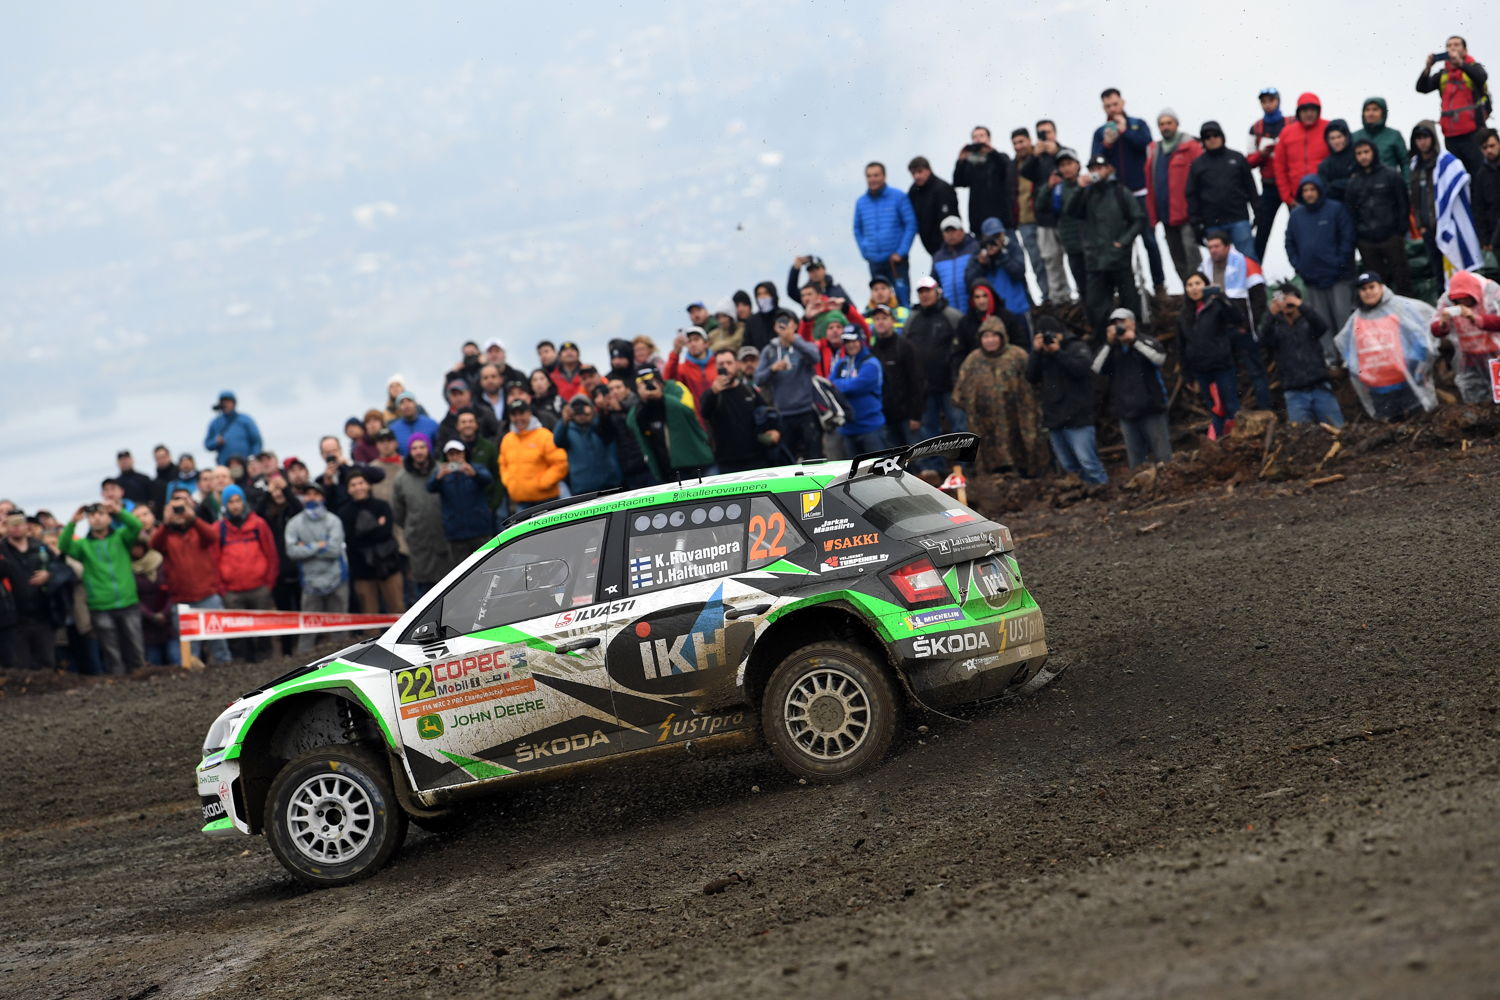 At Rally Chile Kalle Rovanperä/Jonne Halttunen (ŠKODA
FABIA R5) achieved their first season win in WRC 2 Pro
Category of the 2019 FIA World Rally Championship